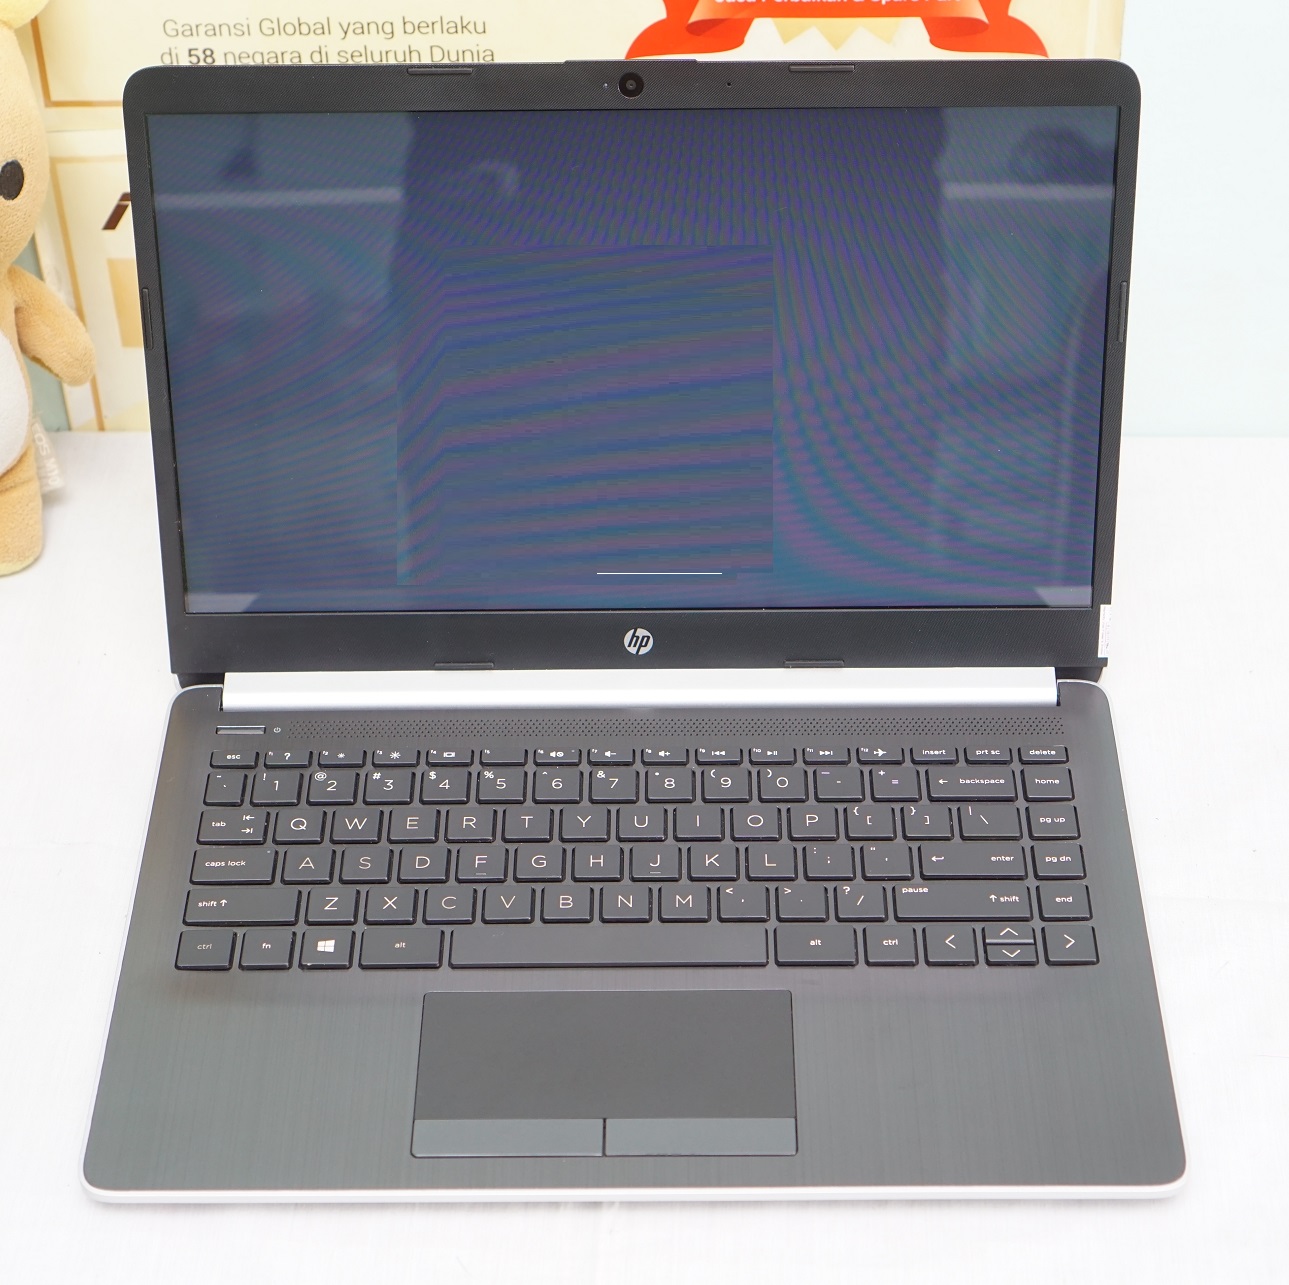 HP14-DK002WM AMD Ryzen 3 | Jual Beli Laptop Second dan